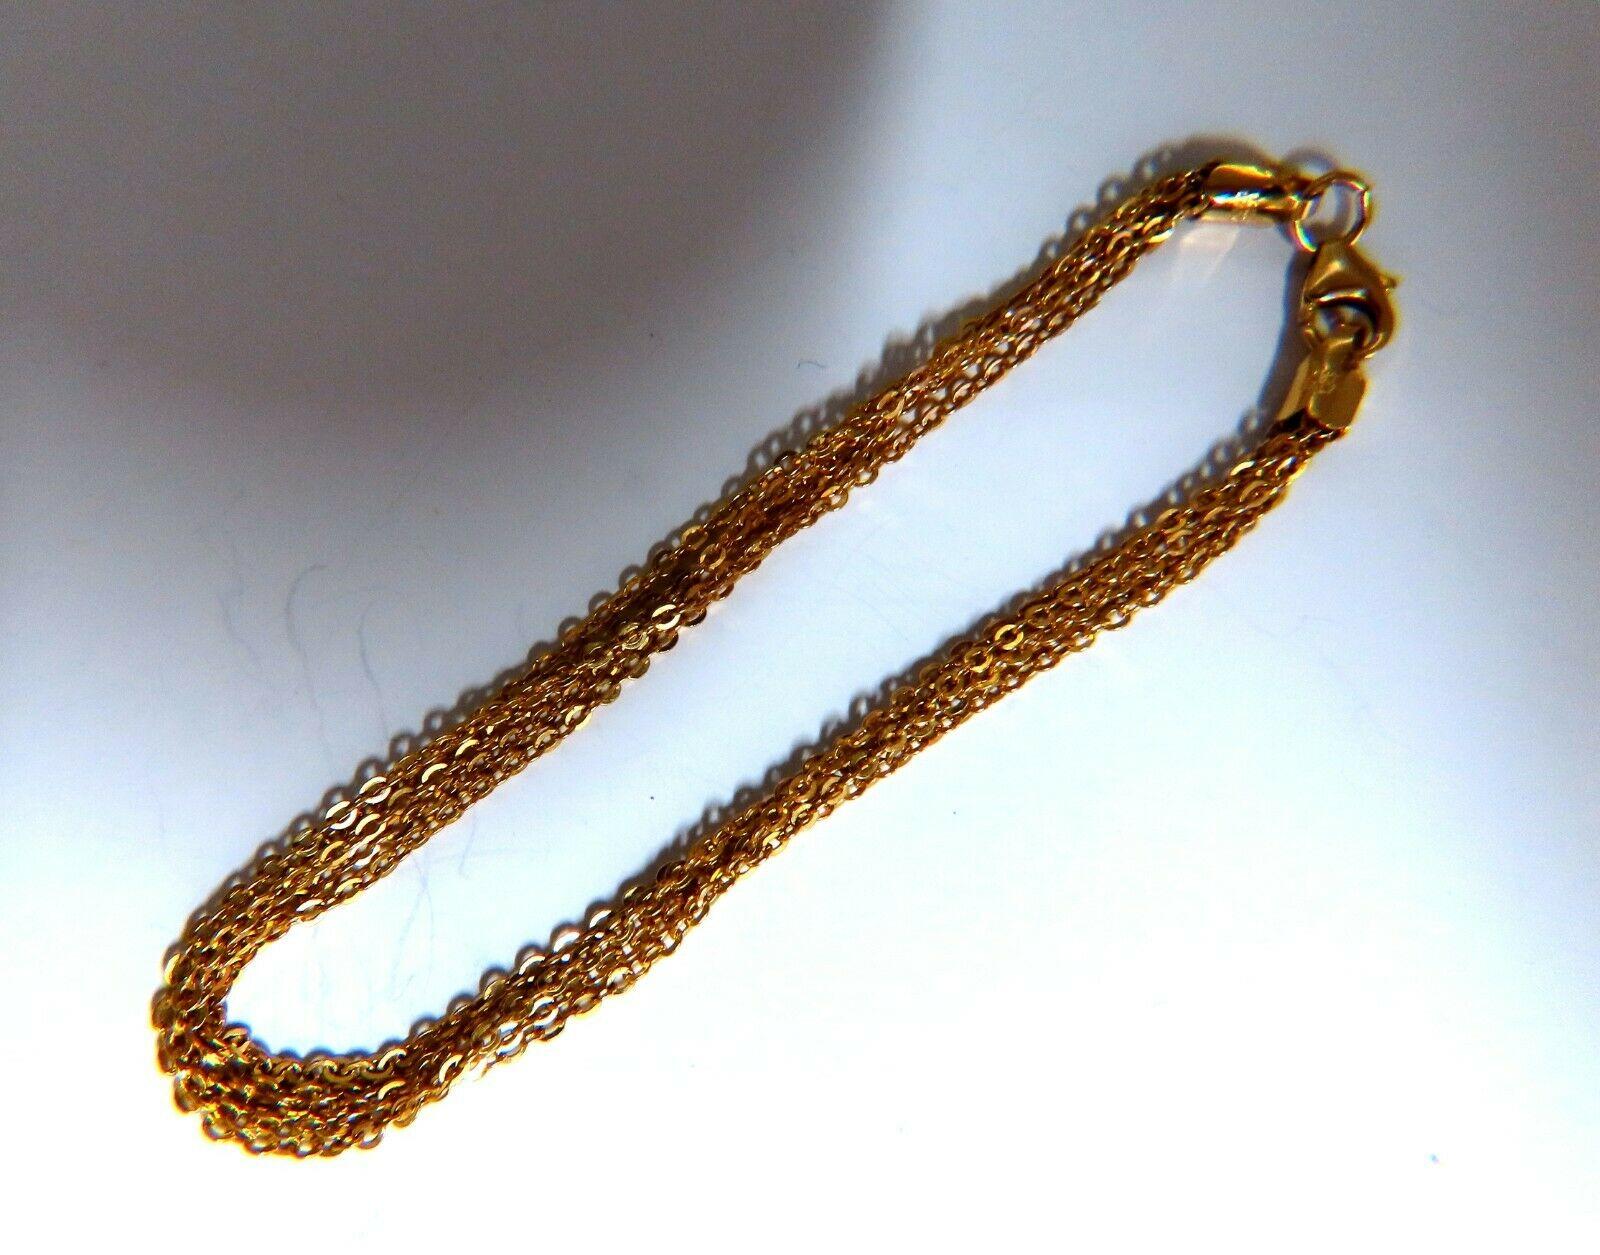 Classic 5 chain link bracelet

1mm caliber each chain

14 karat yellow gold 2.8 grams

Chain measure 7 inch

Secure lock